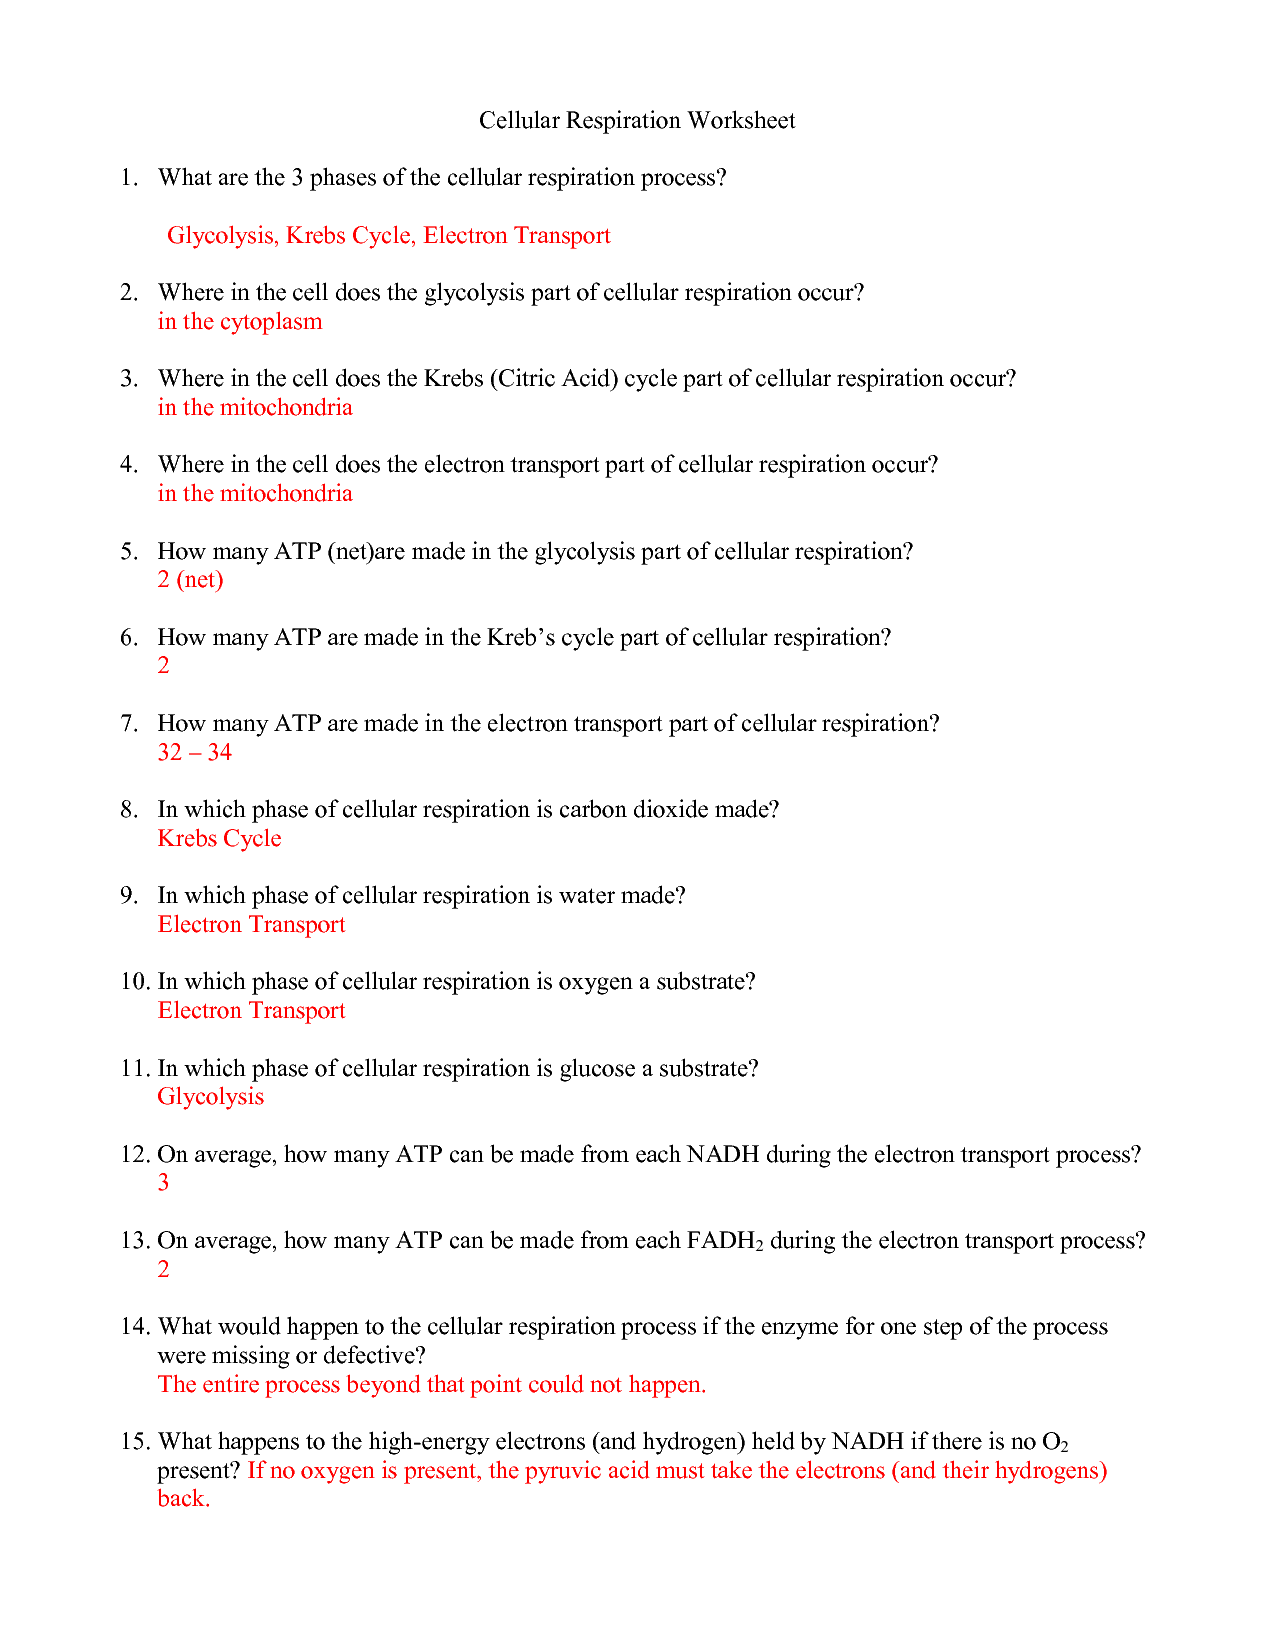 Cellular Respiration Worksheet Answer Key Image